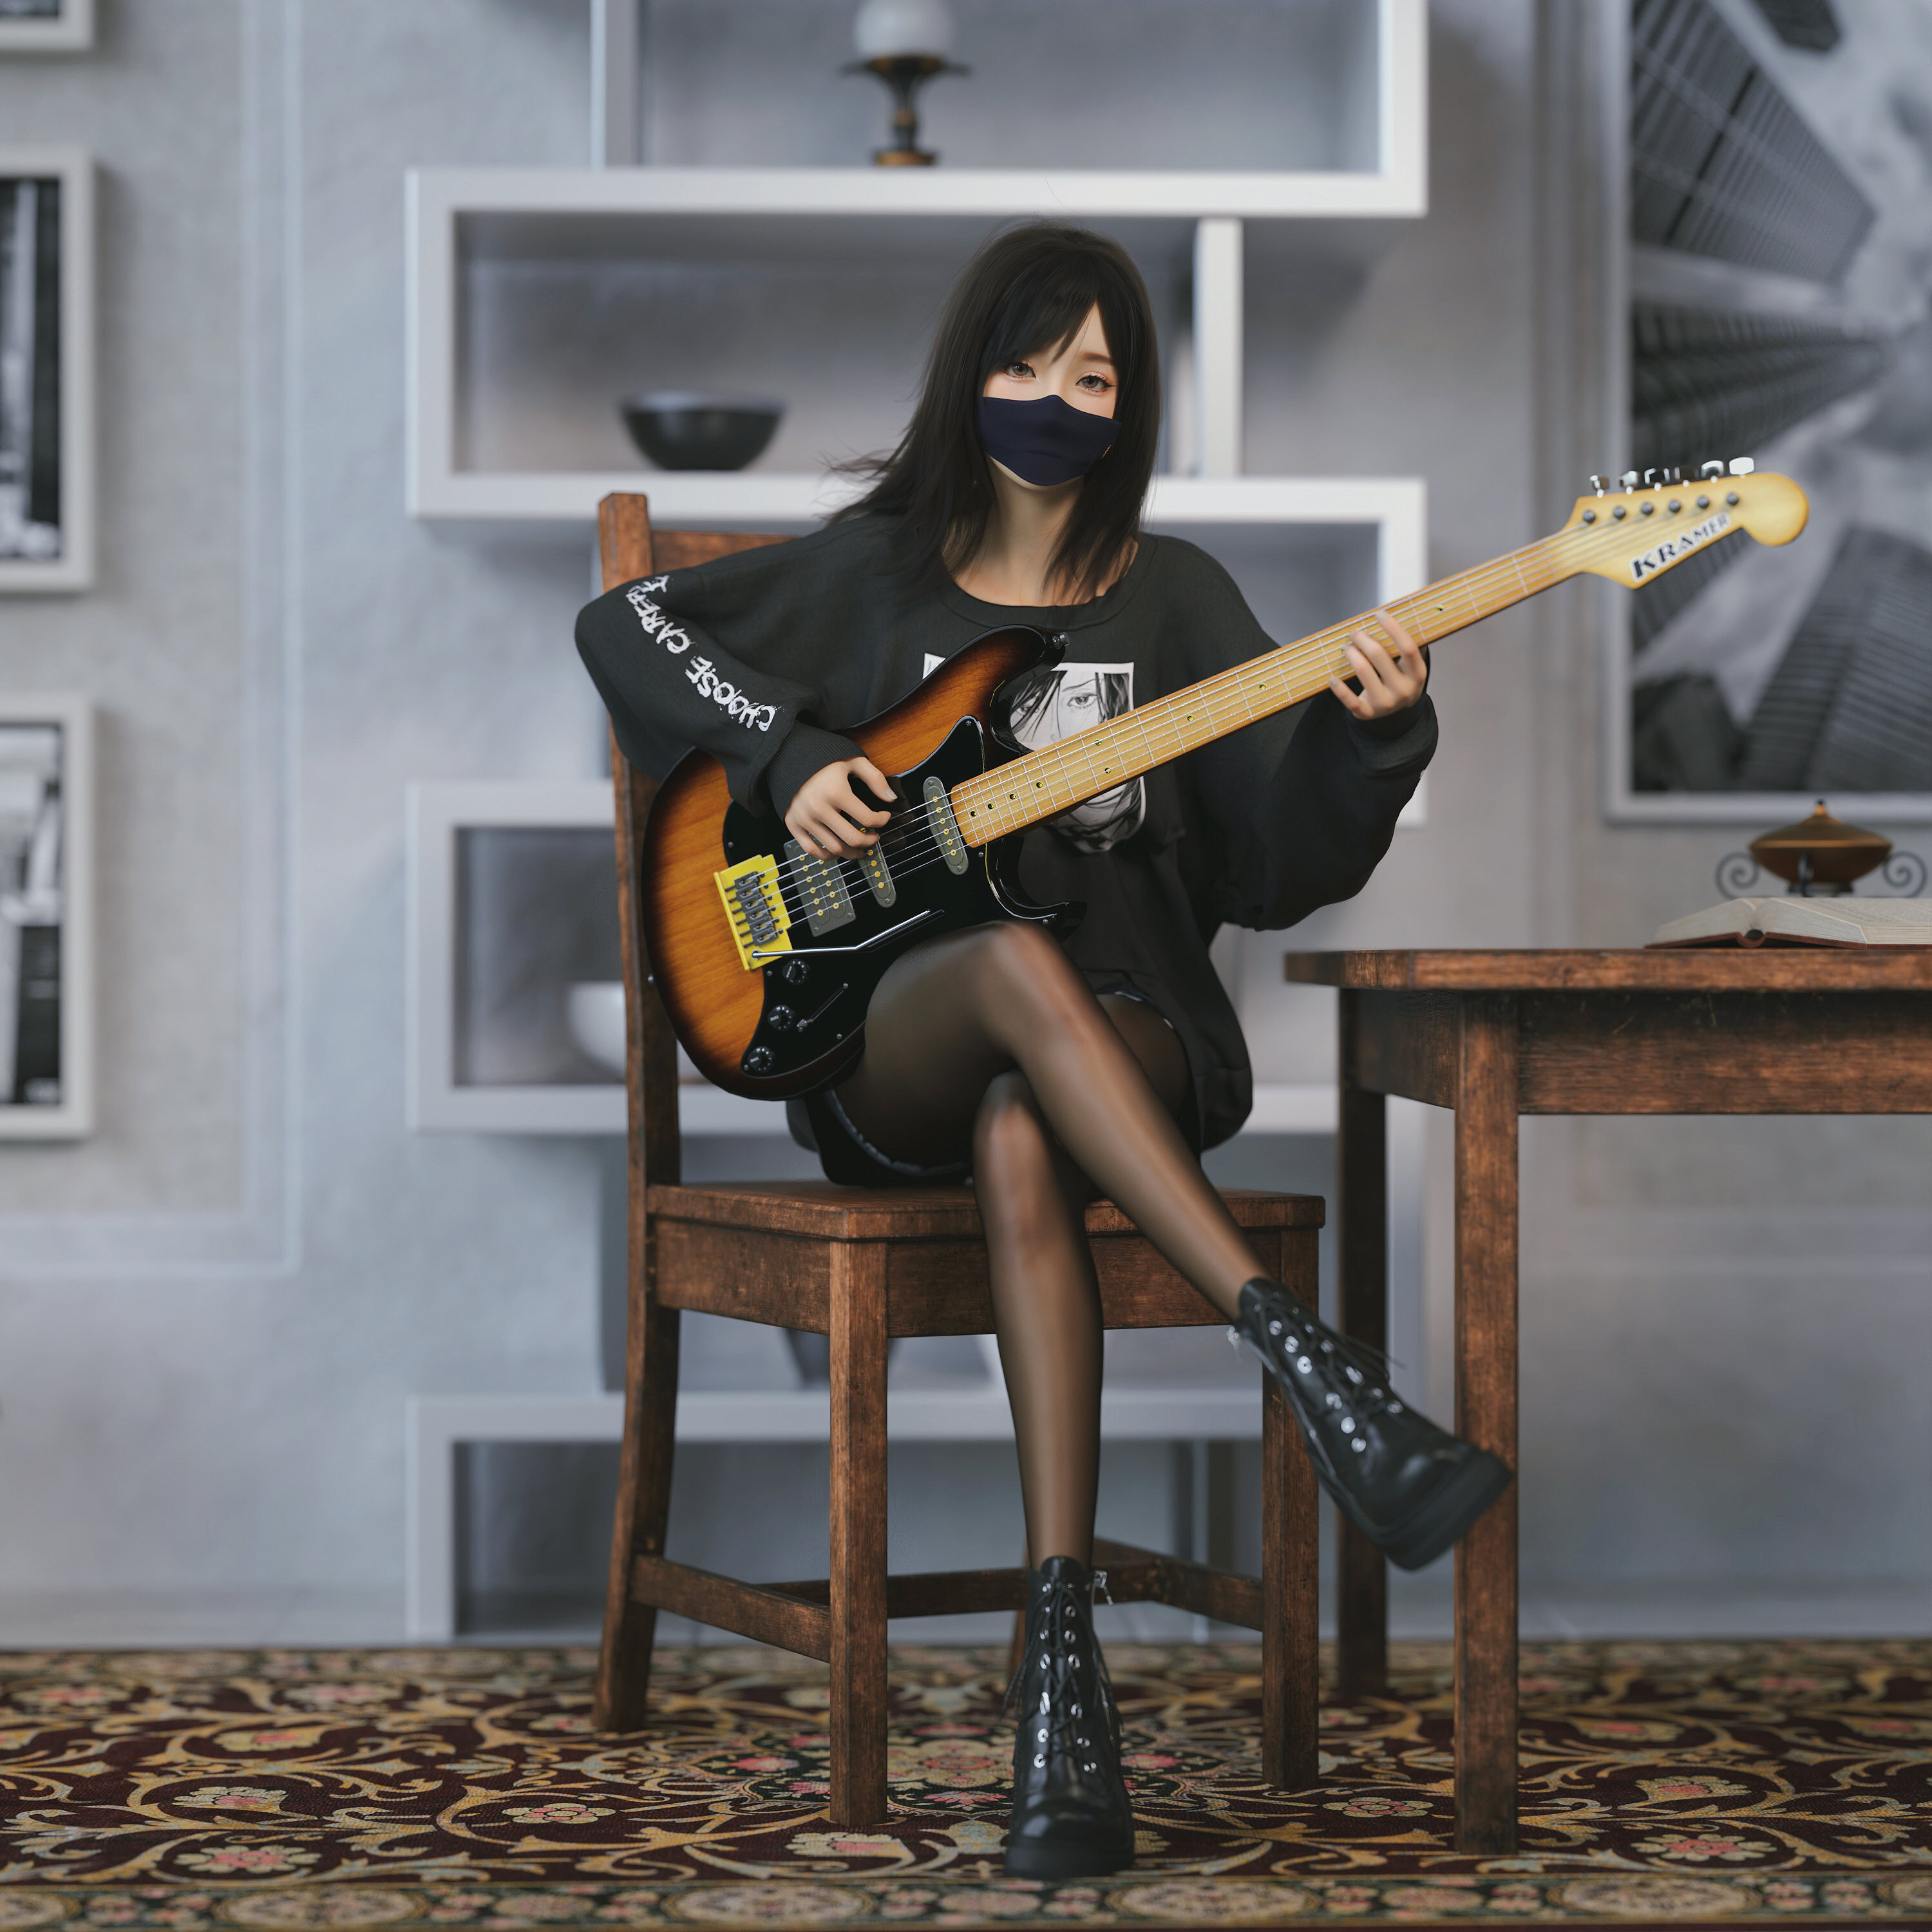 3D CG Fantasy Girl Guitar Musical Instrument Mask 3000x3000